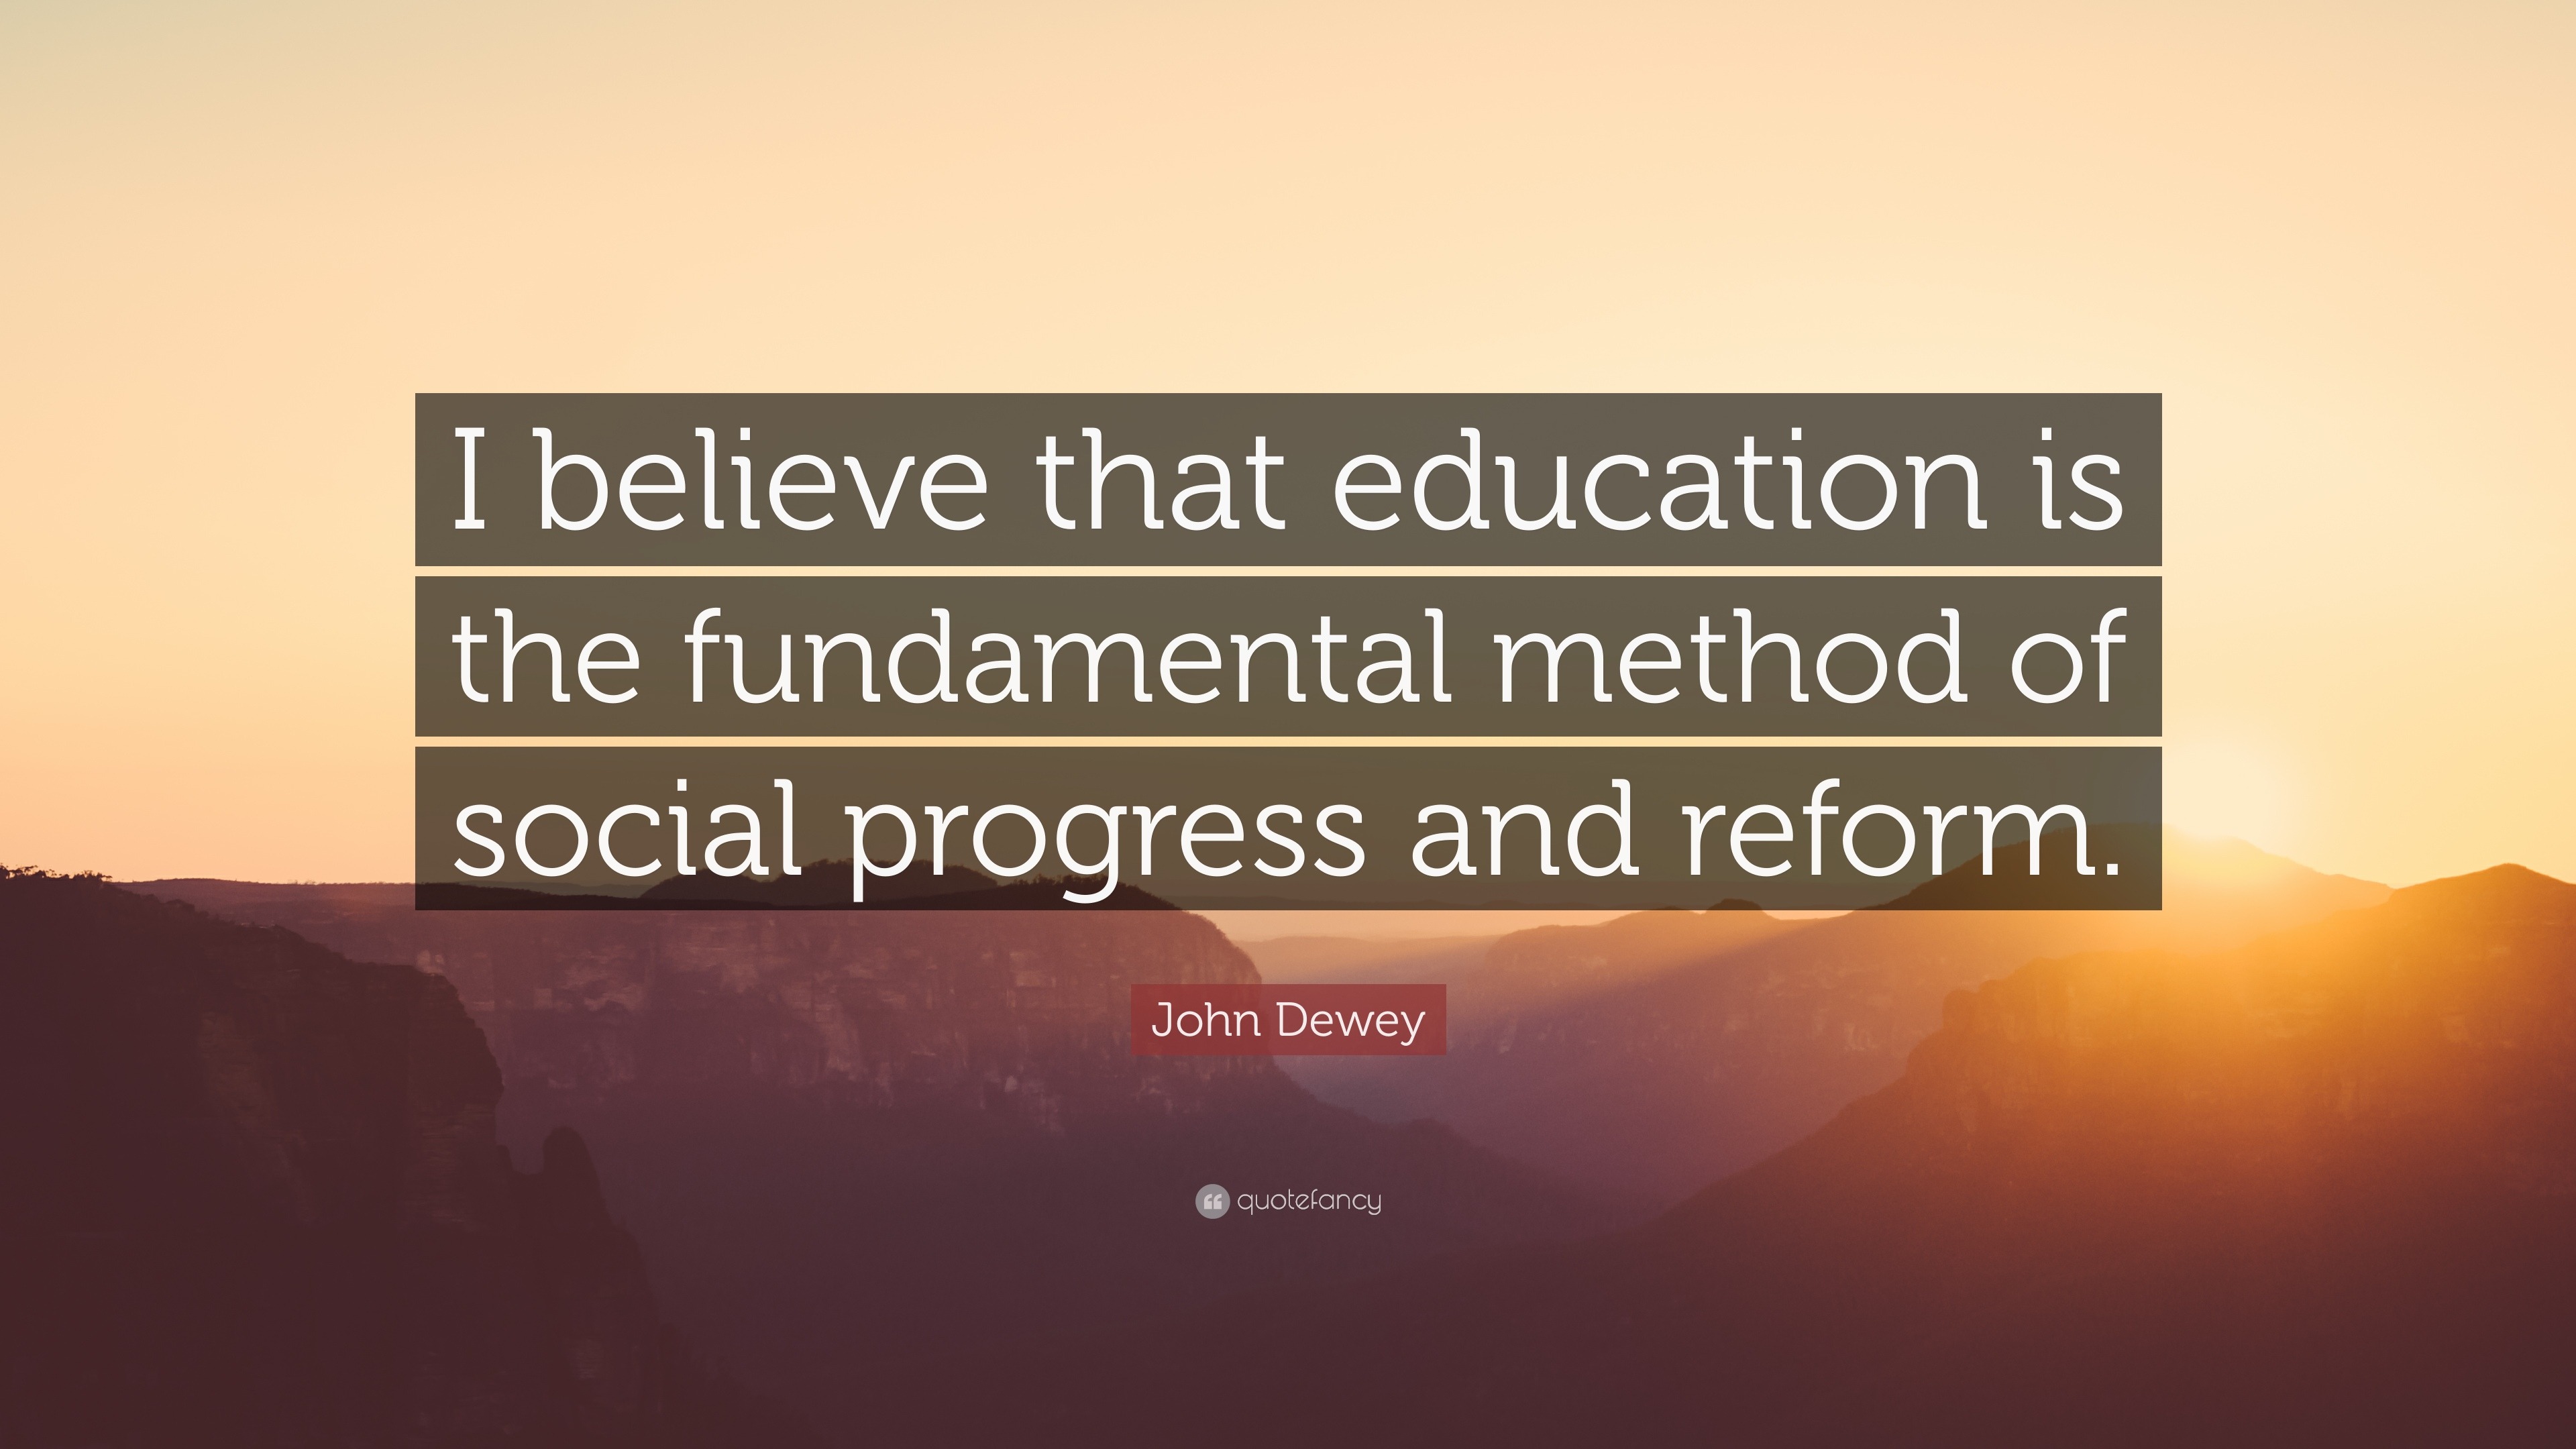 John Dewey Quote: “I believe that education is the fundamental method